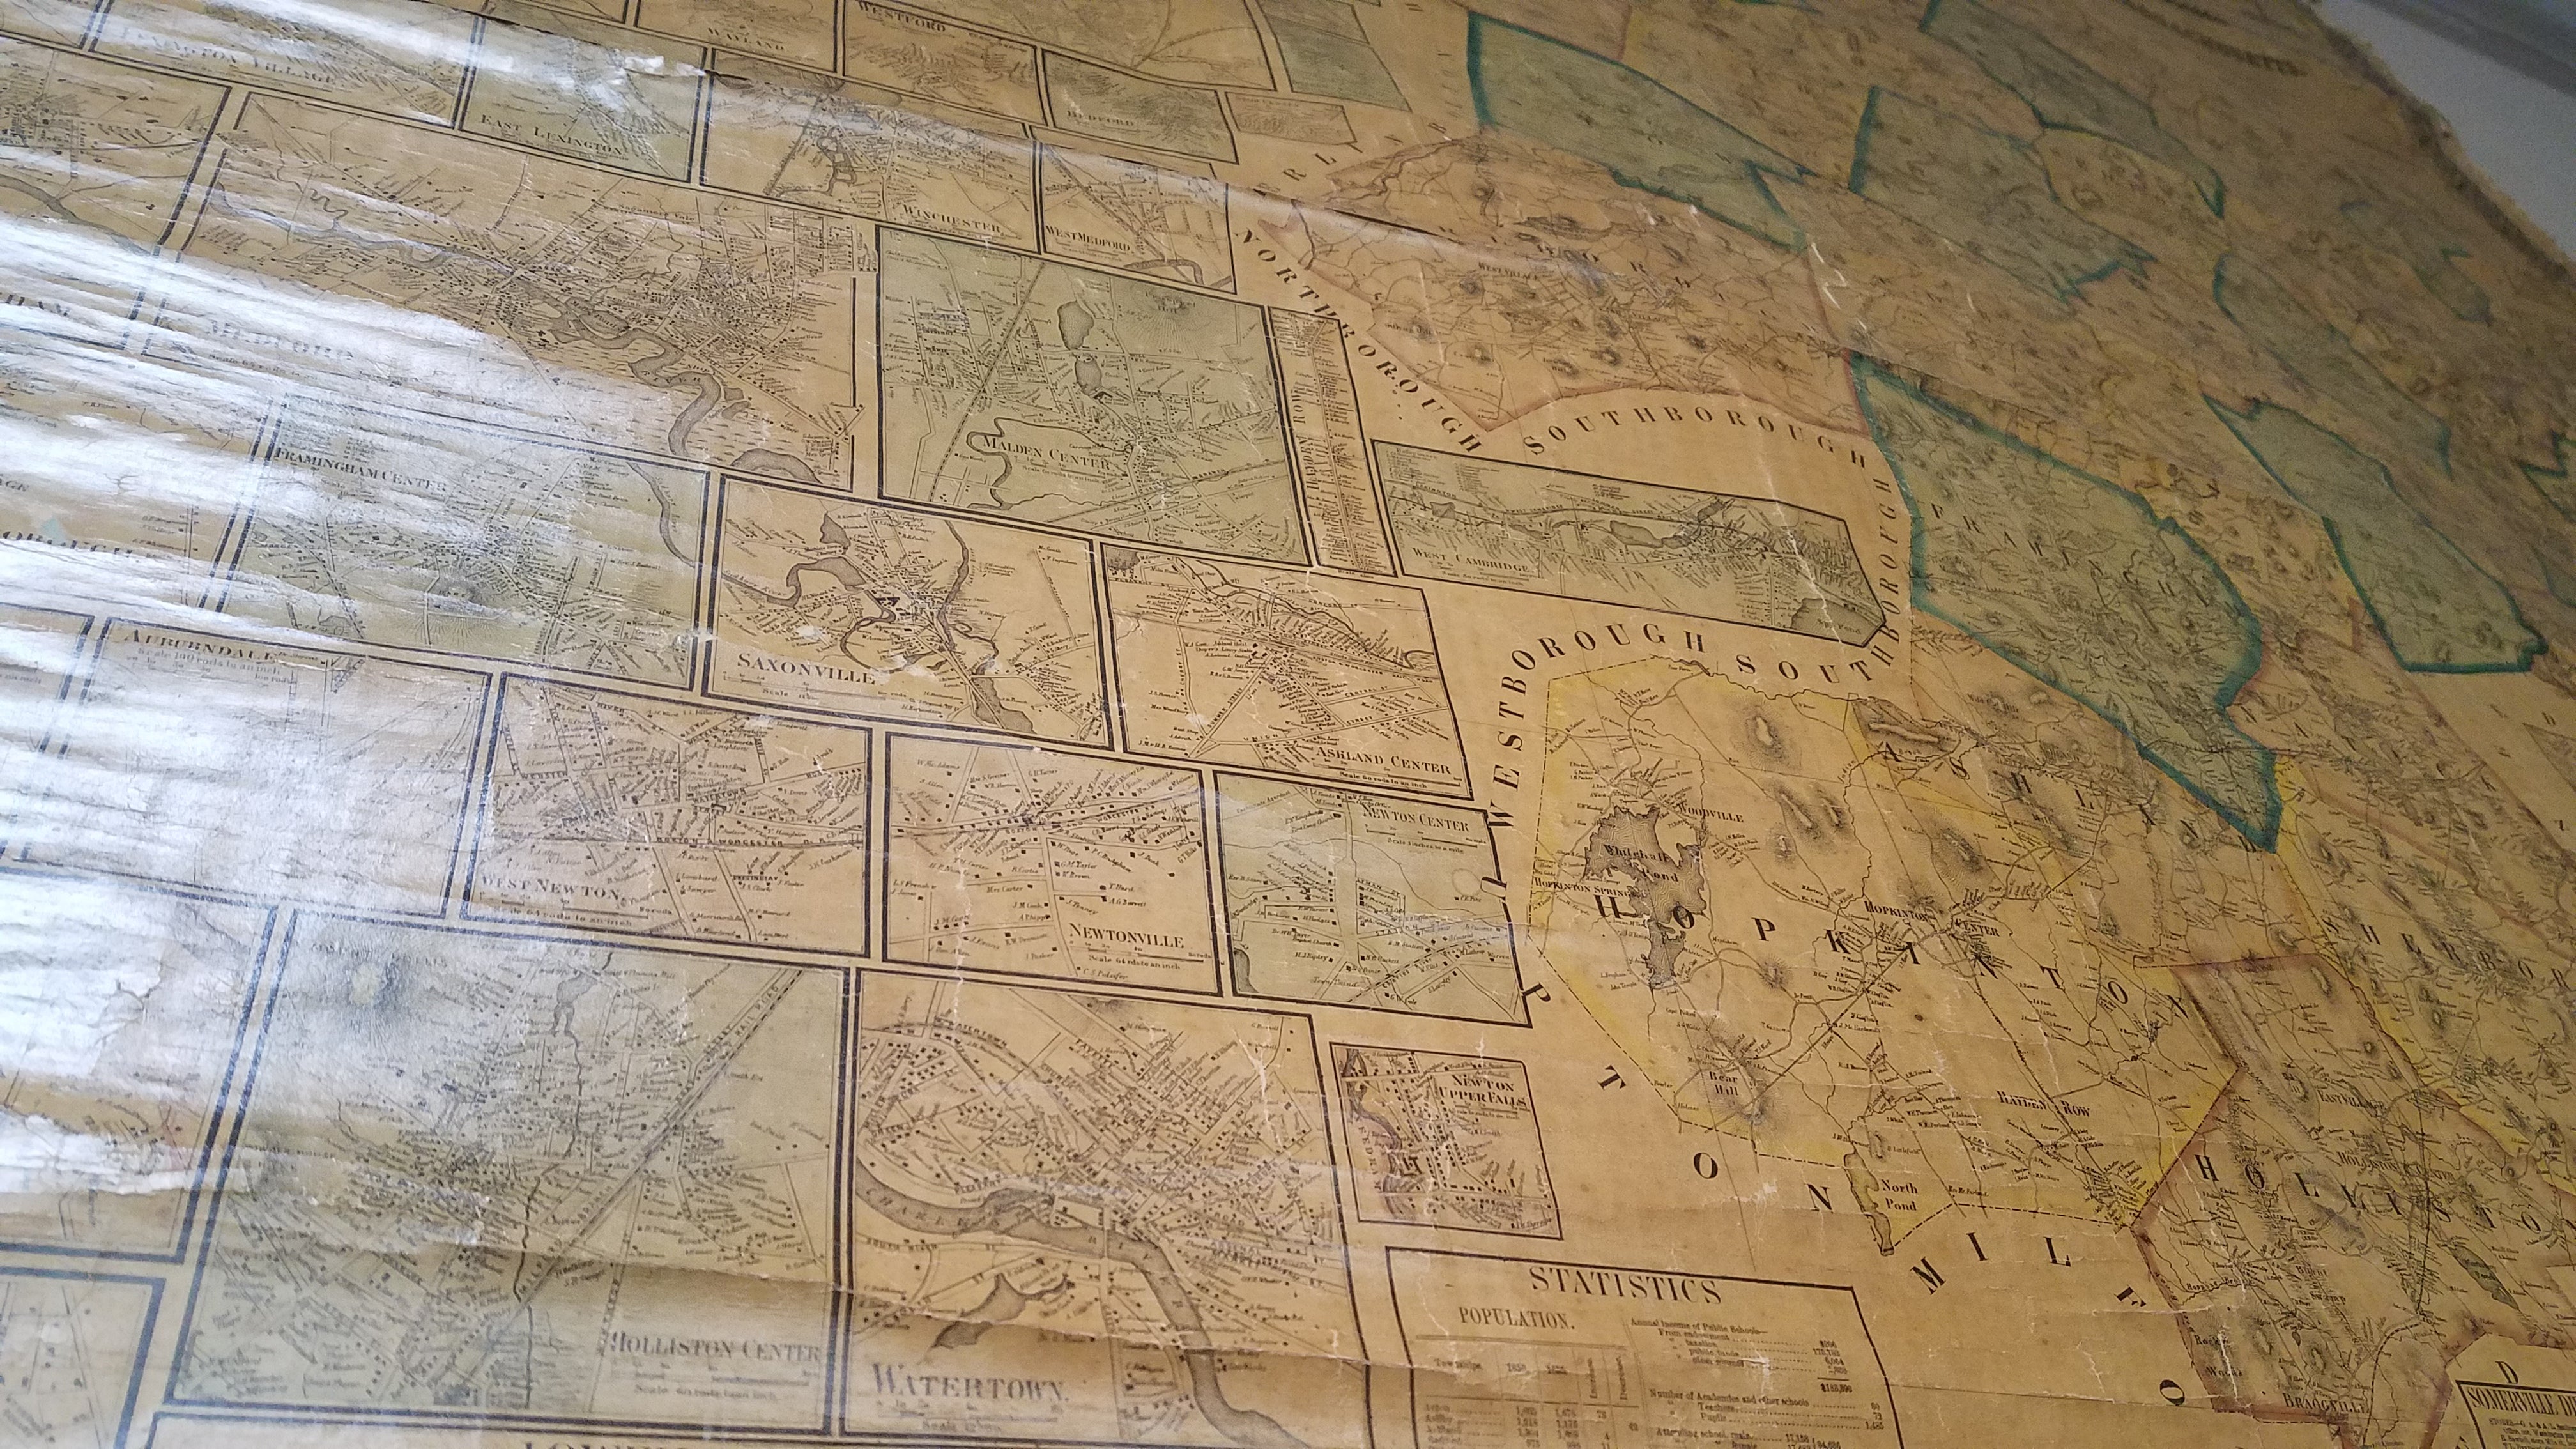 Middlesex County, Massachusetts 1856 Wall Map